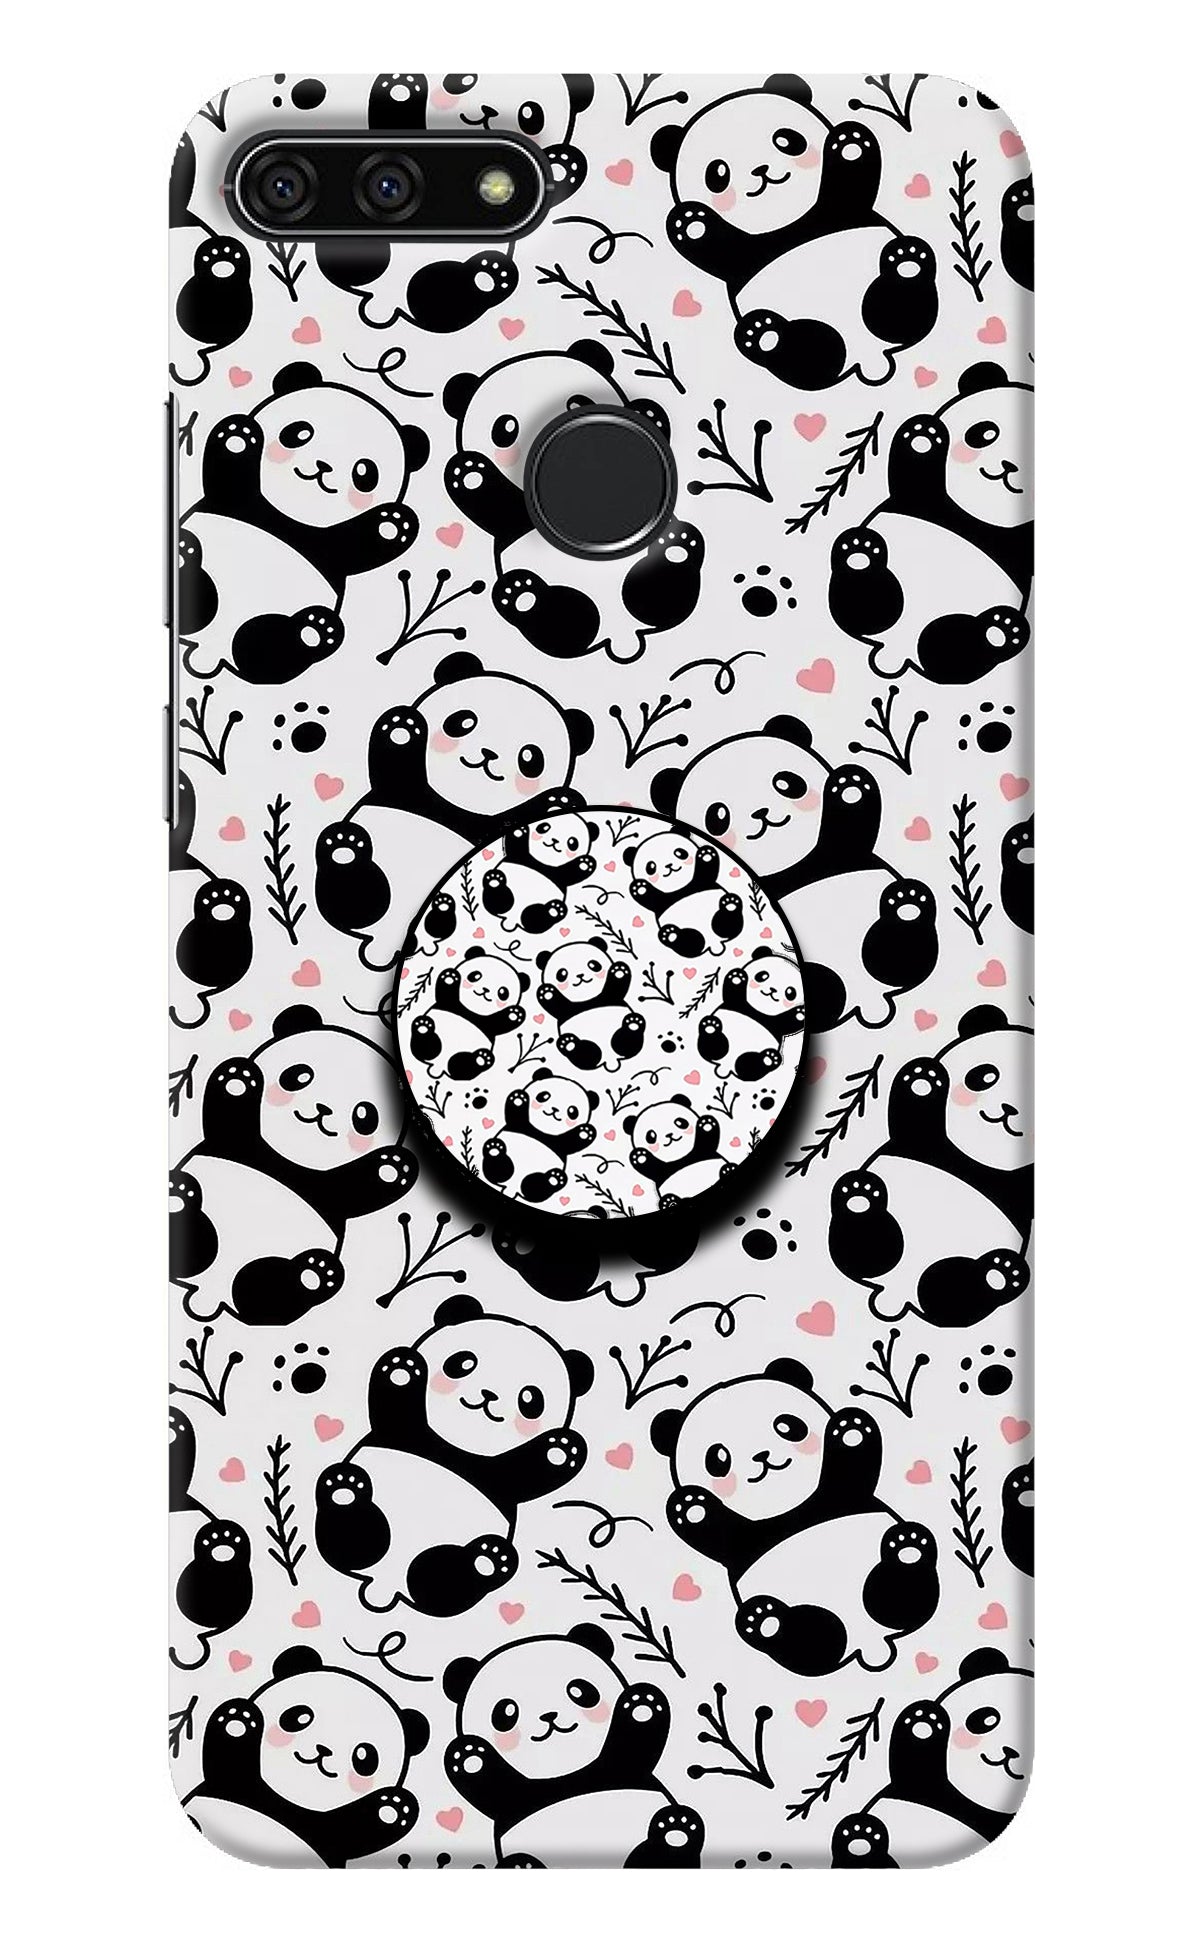 Cute Panda Honor 7A Pop Case